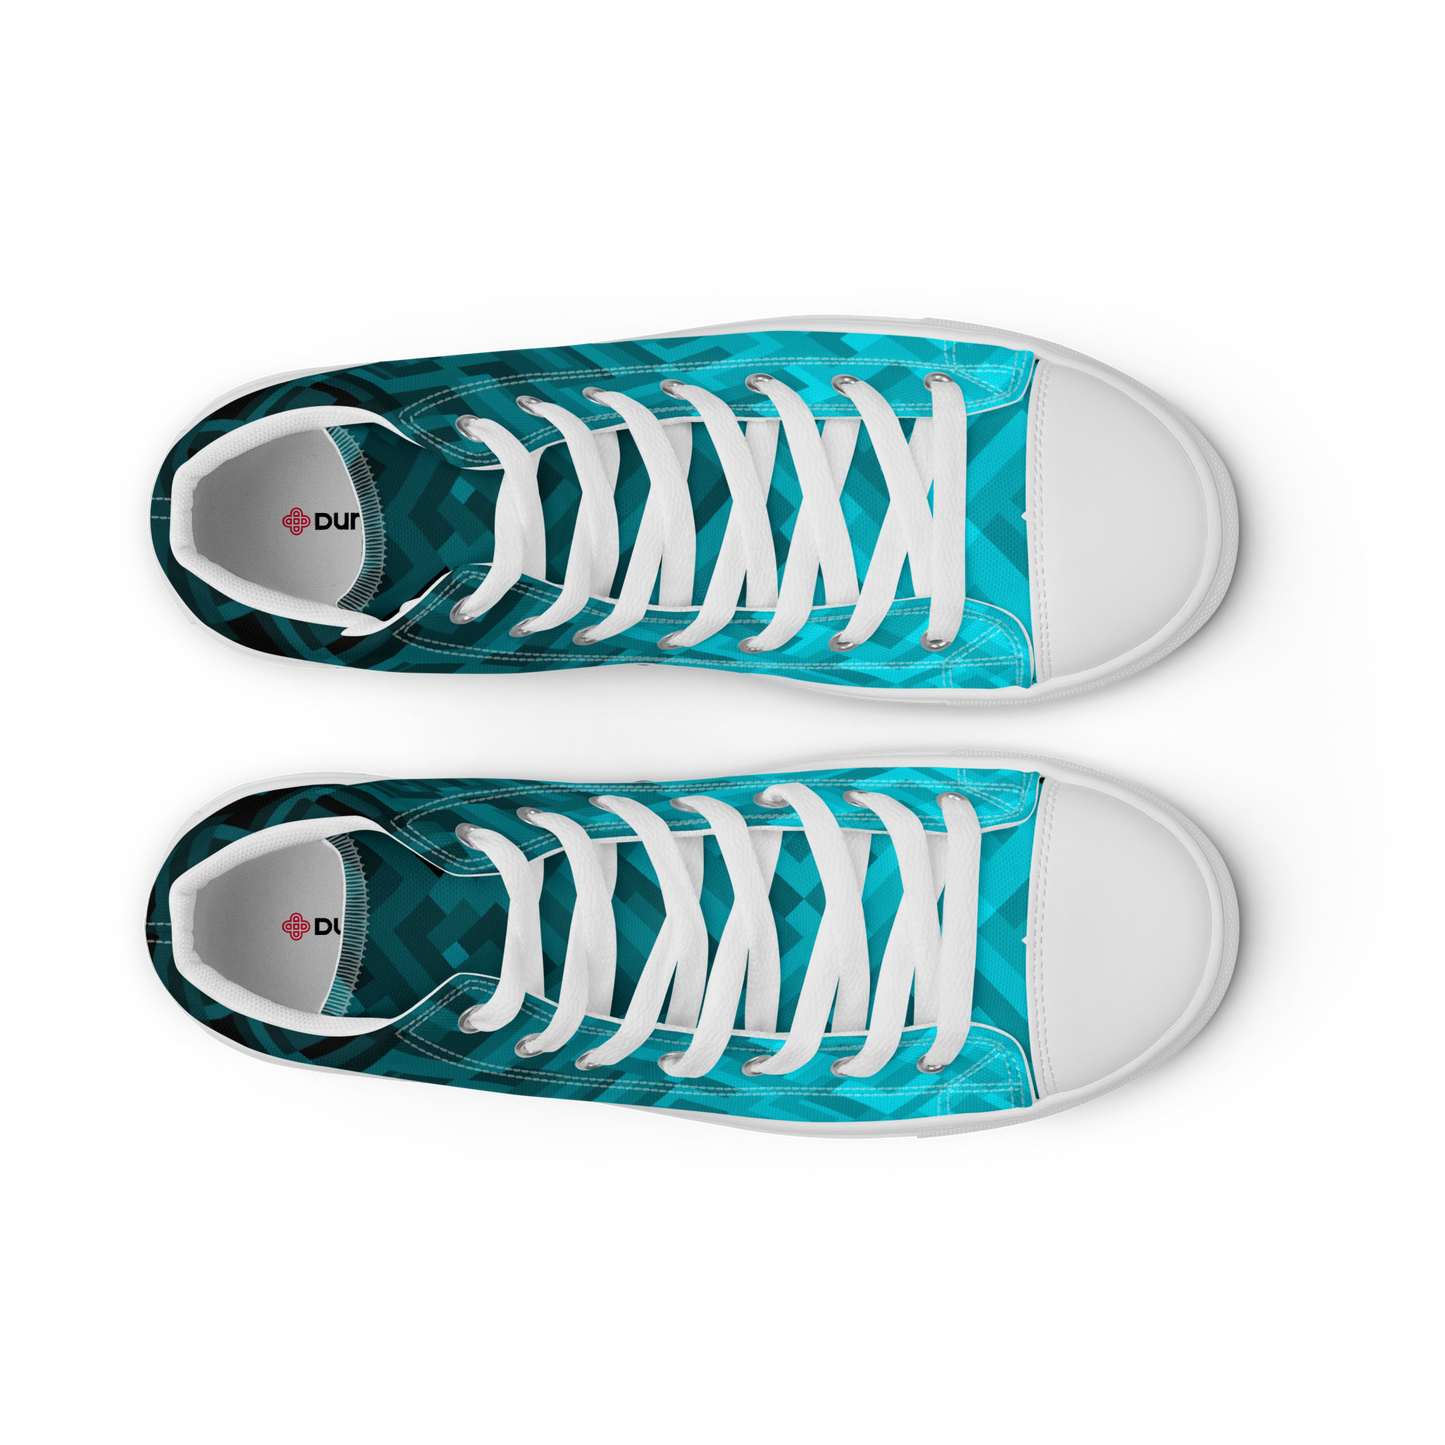 Women's Canvas Sneakers ❯ Polygonal Gradient ❯ Springboard